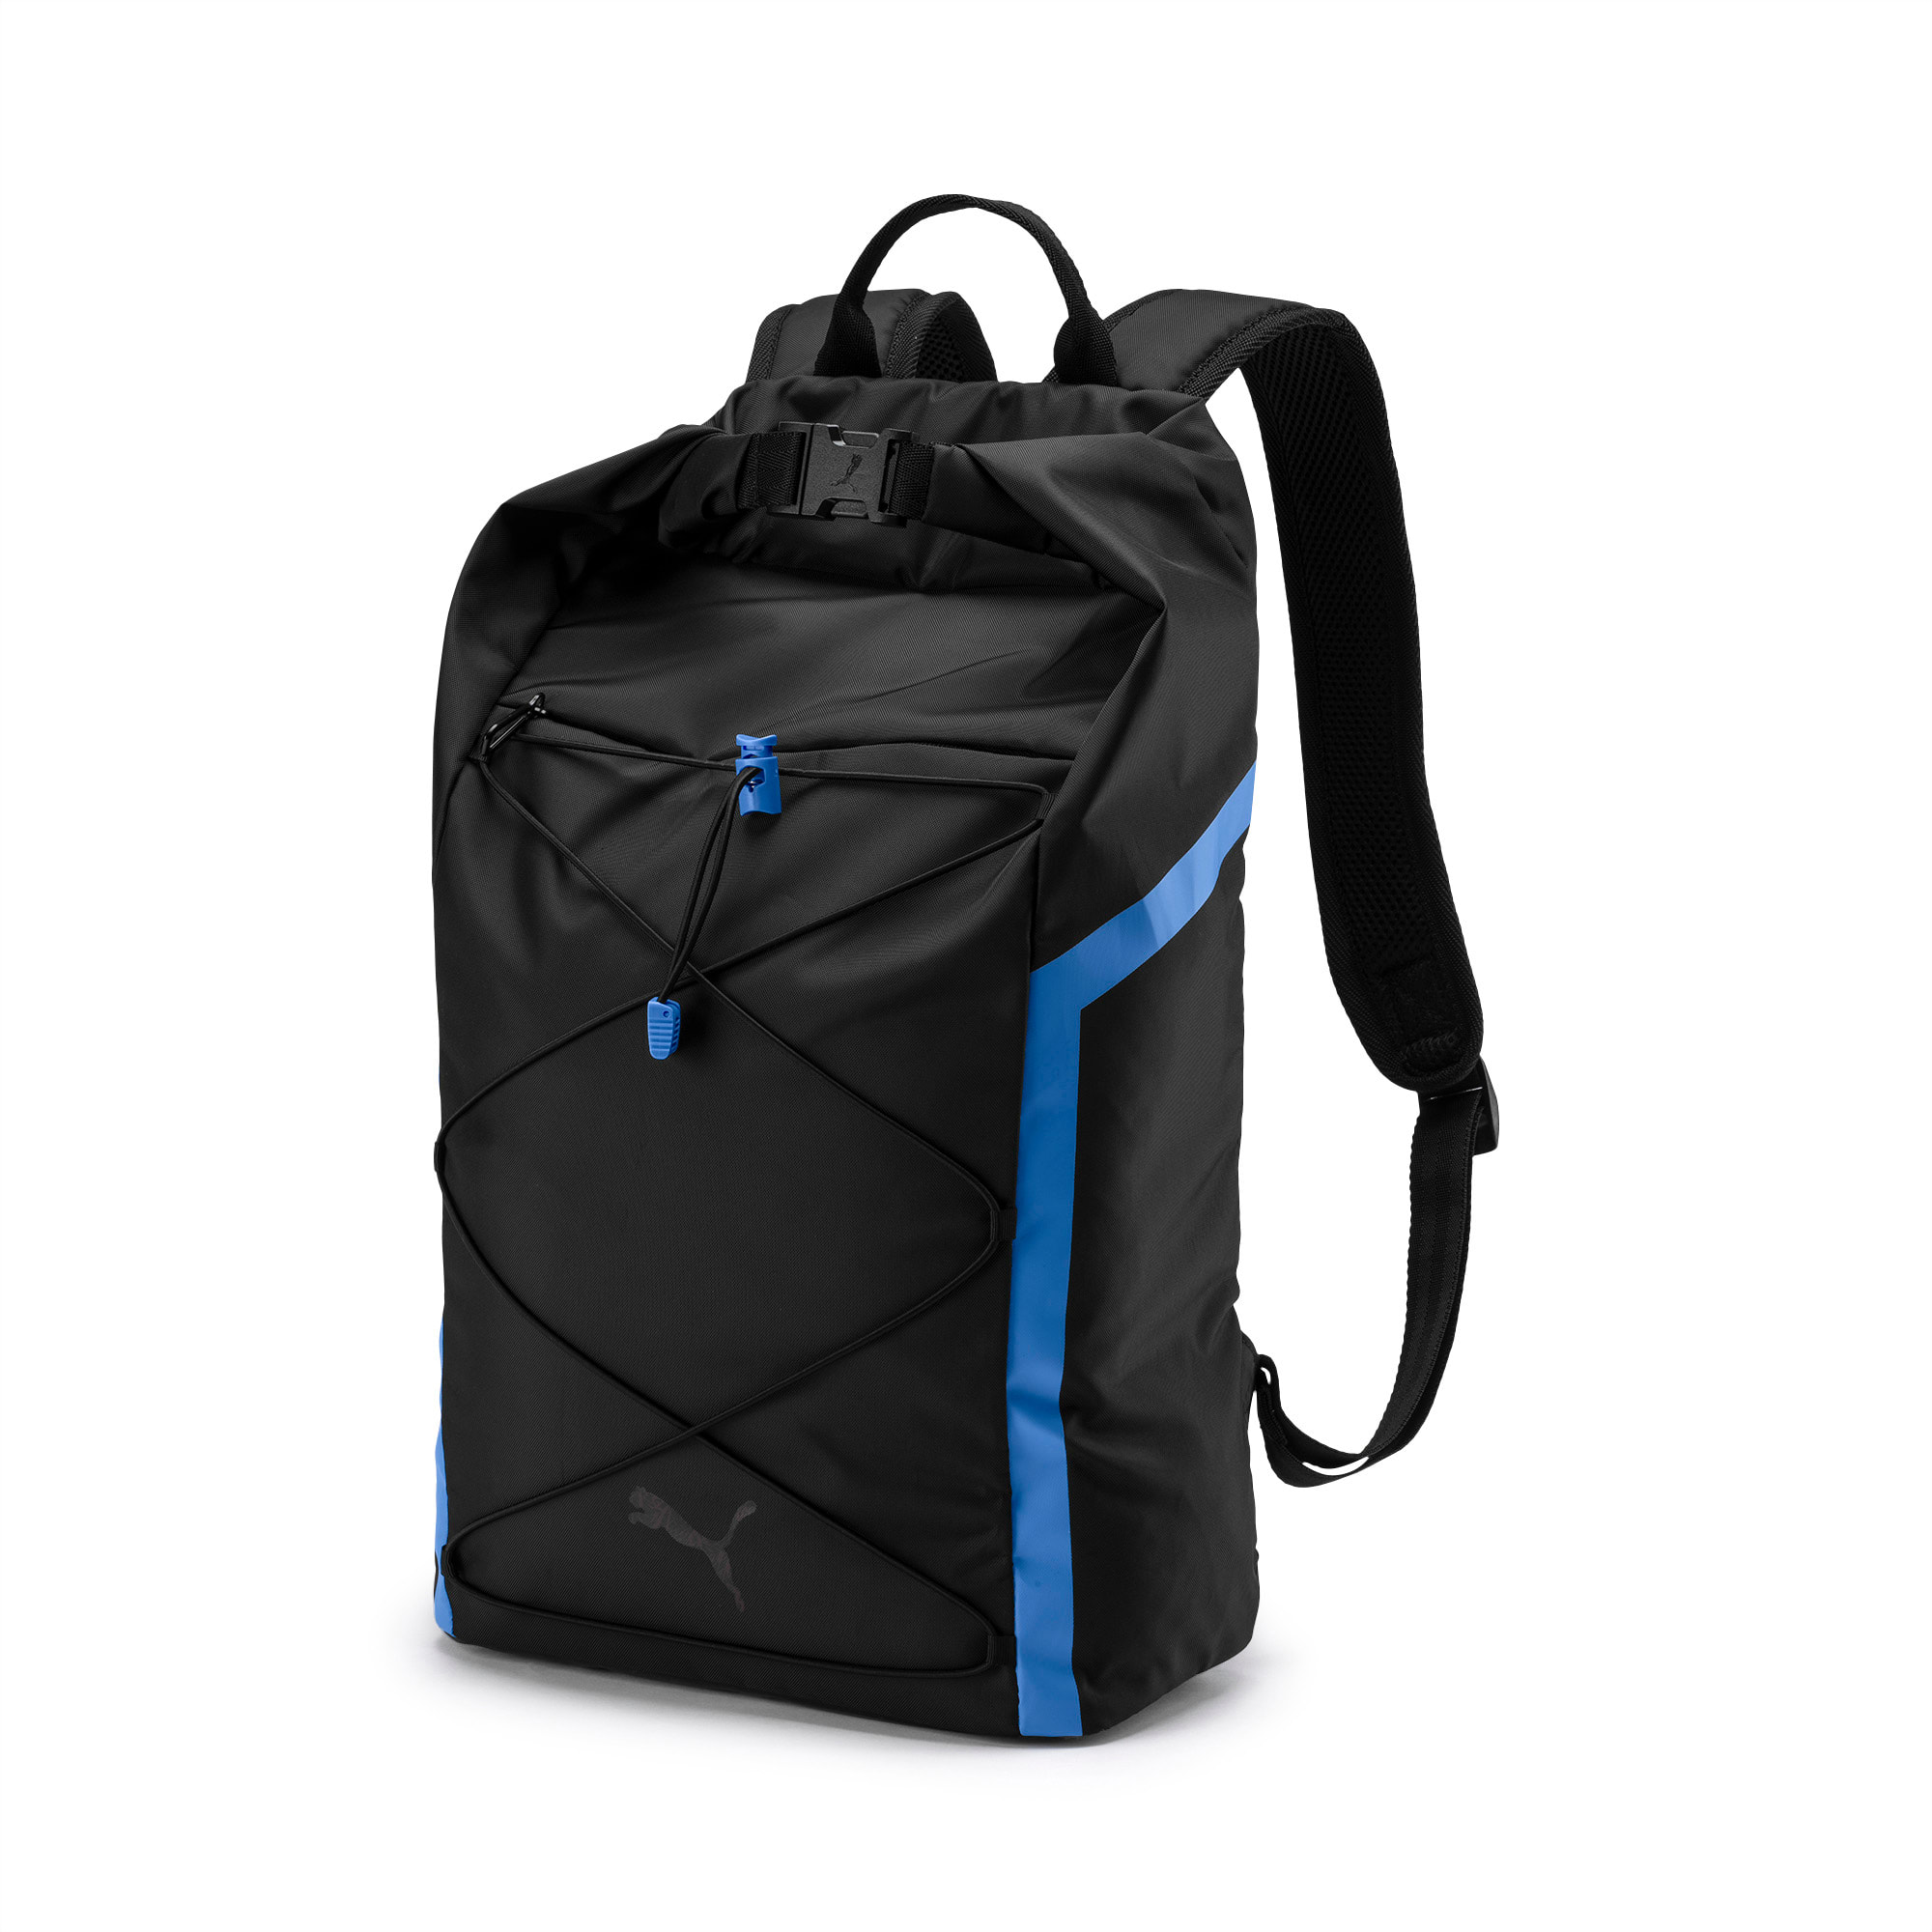 puma laptop bag blue black